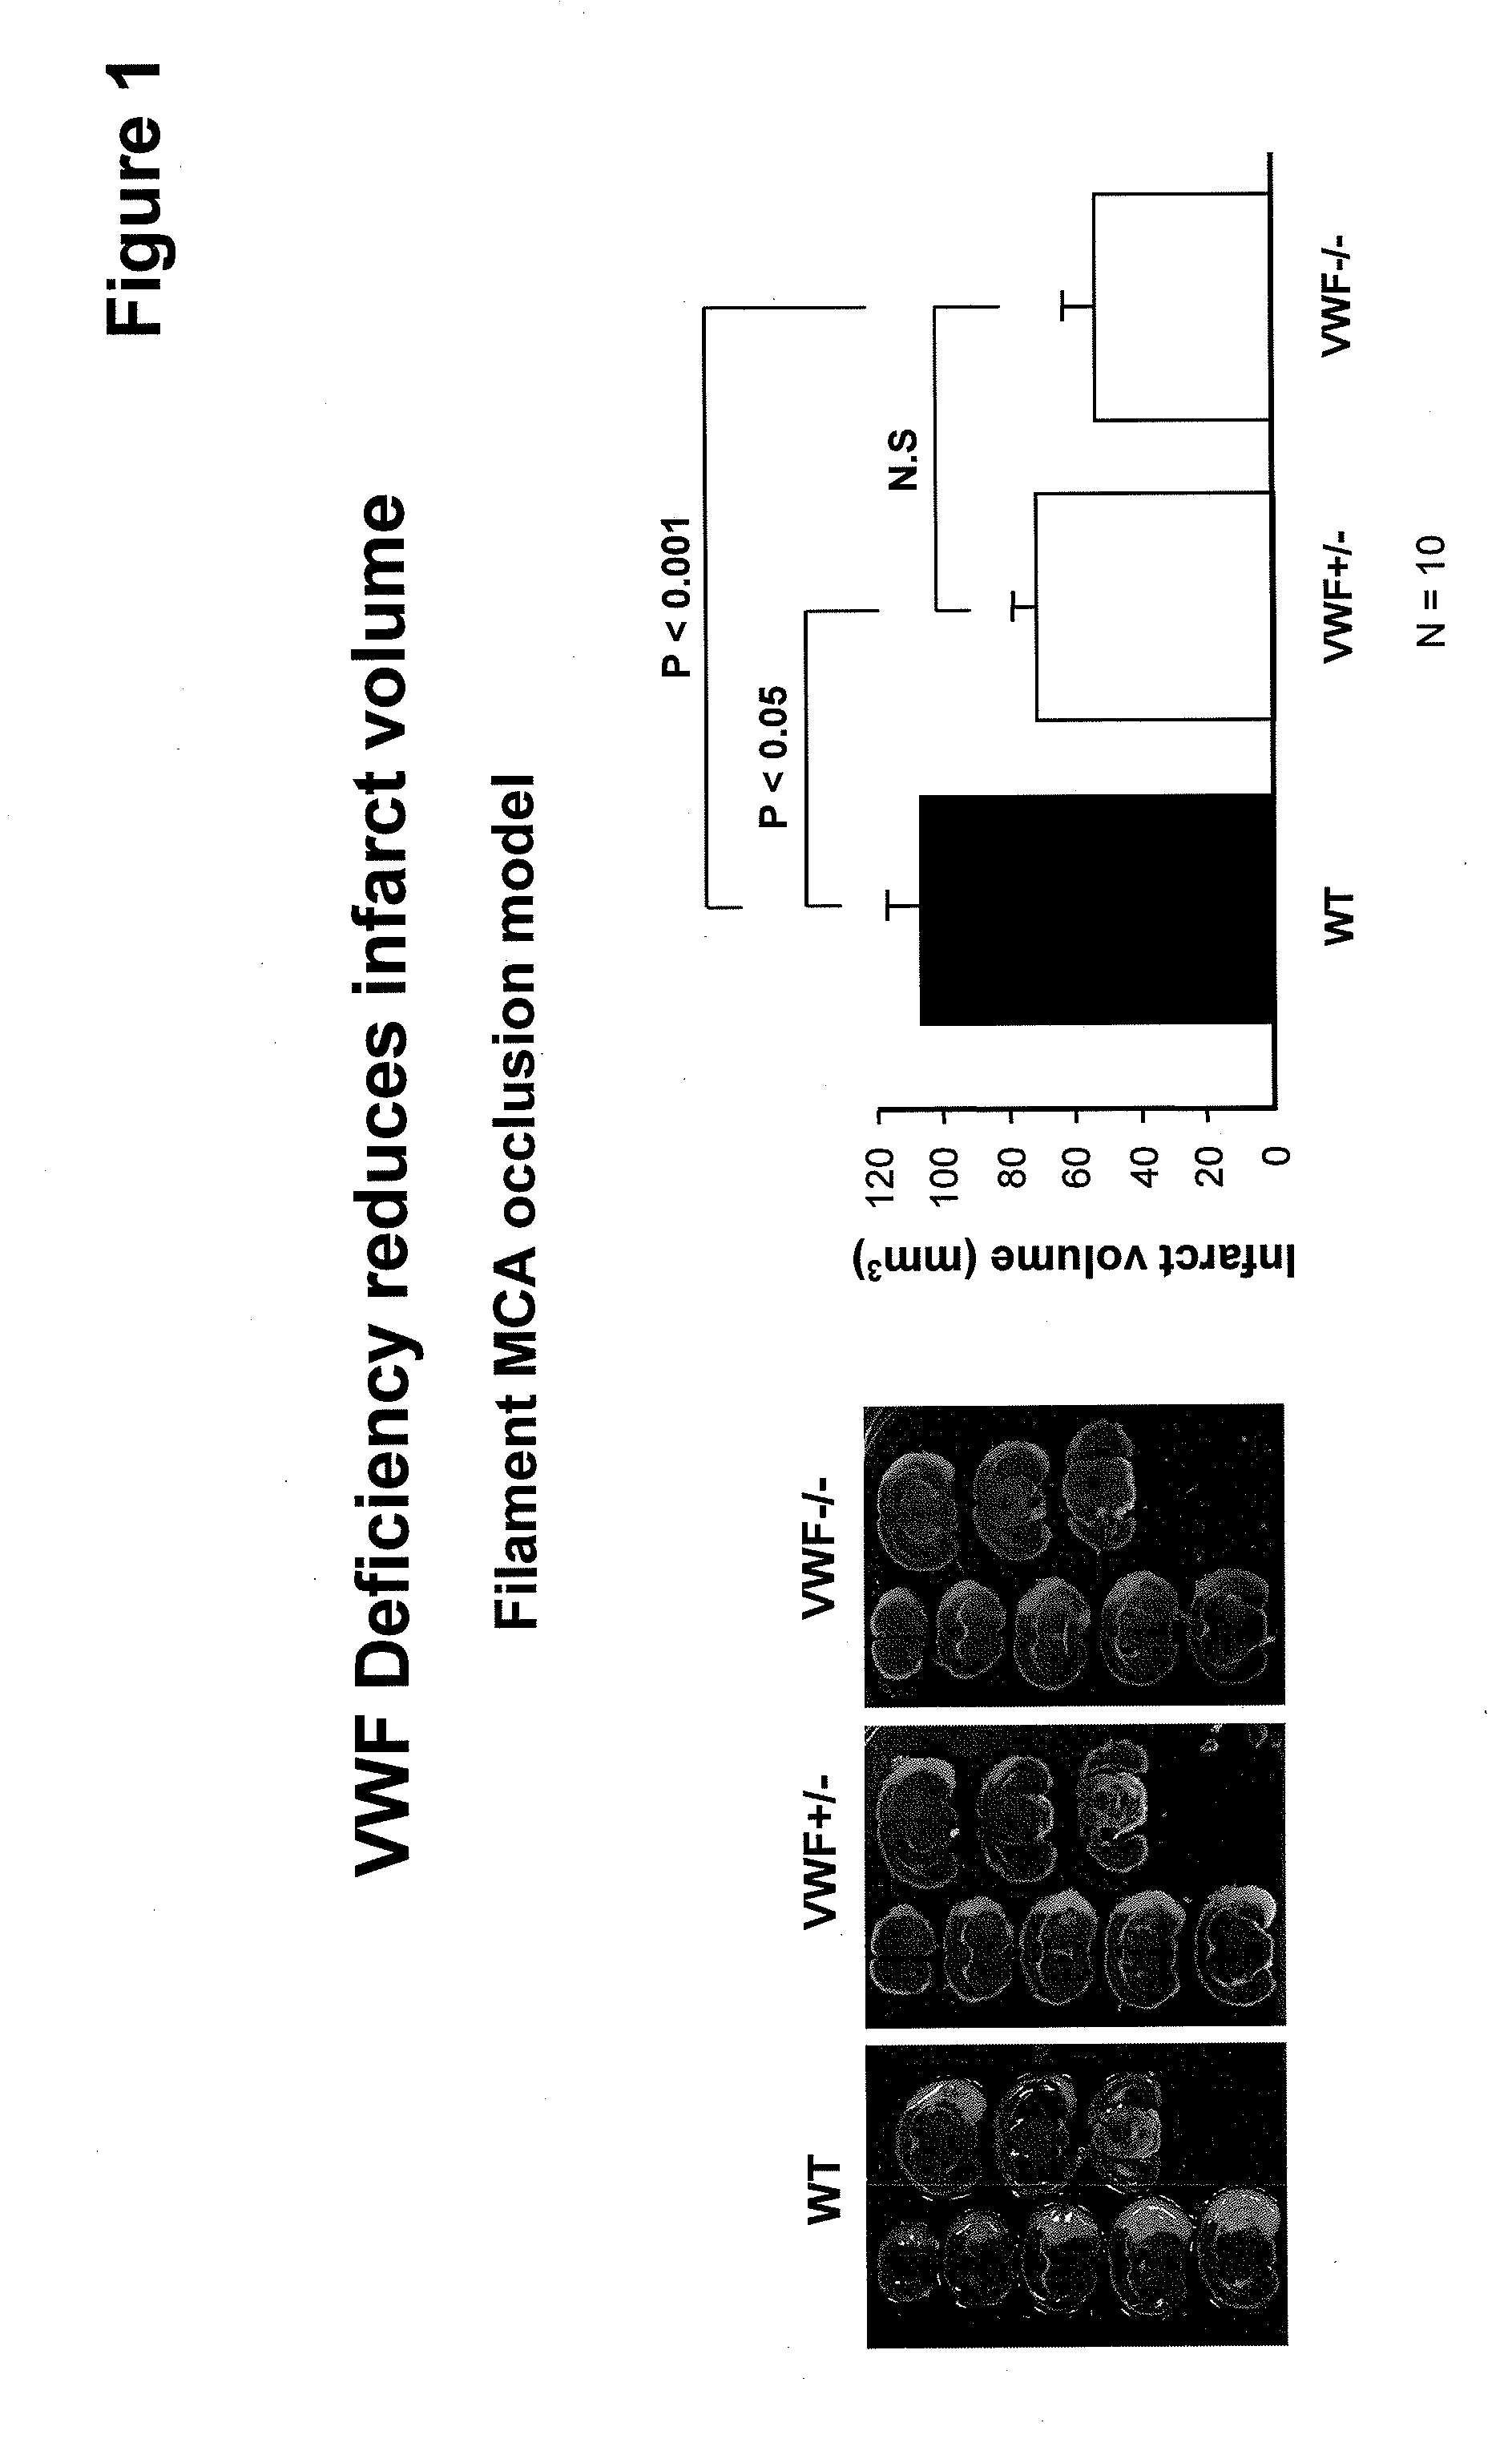 Von willebrand factor (VWF) inhibitors for treatment or prevention of infarction